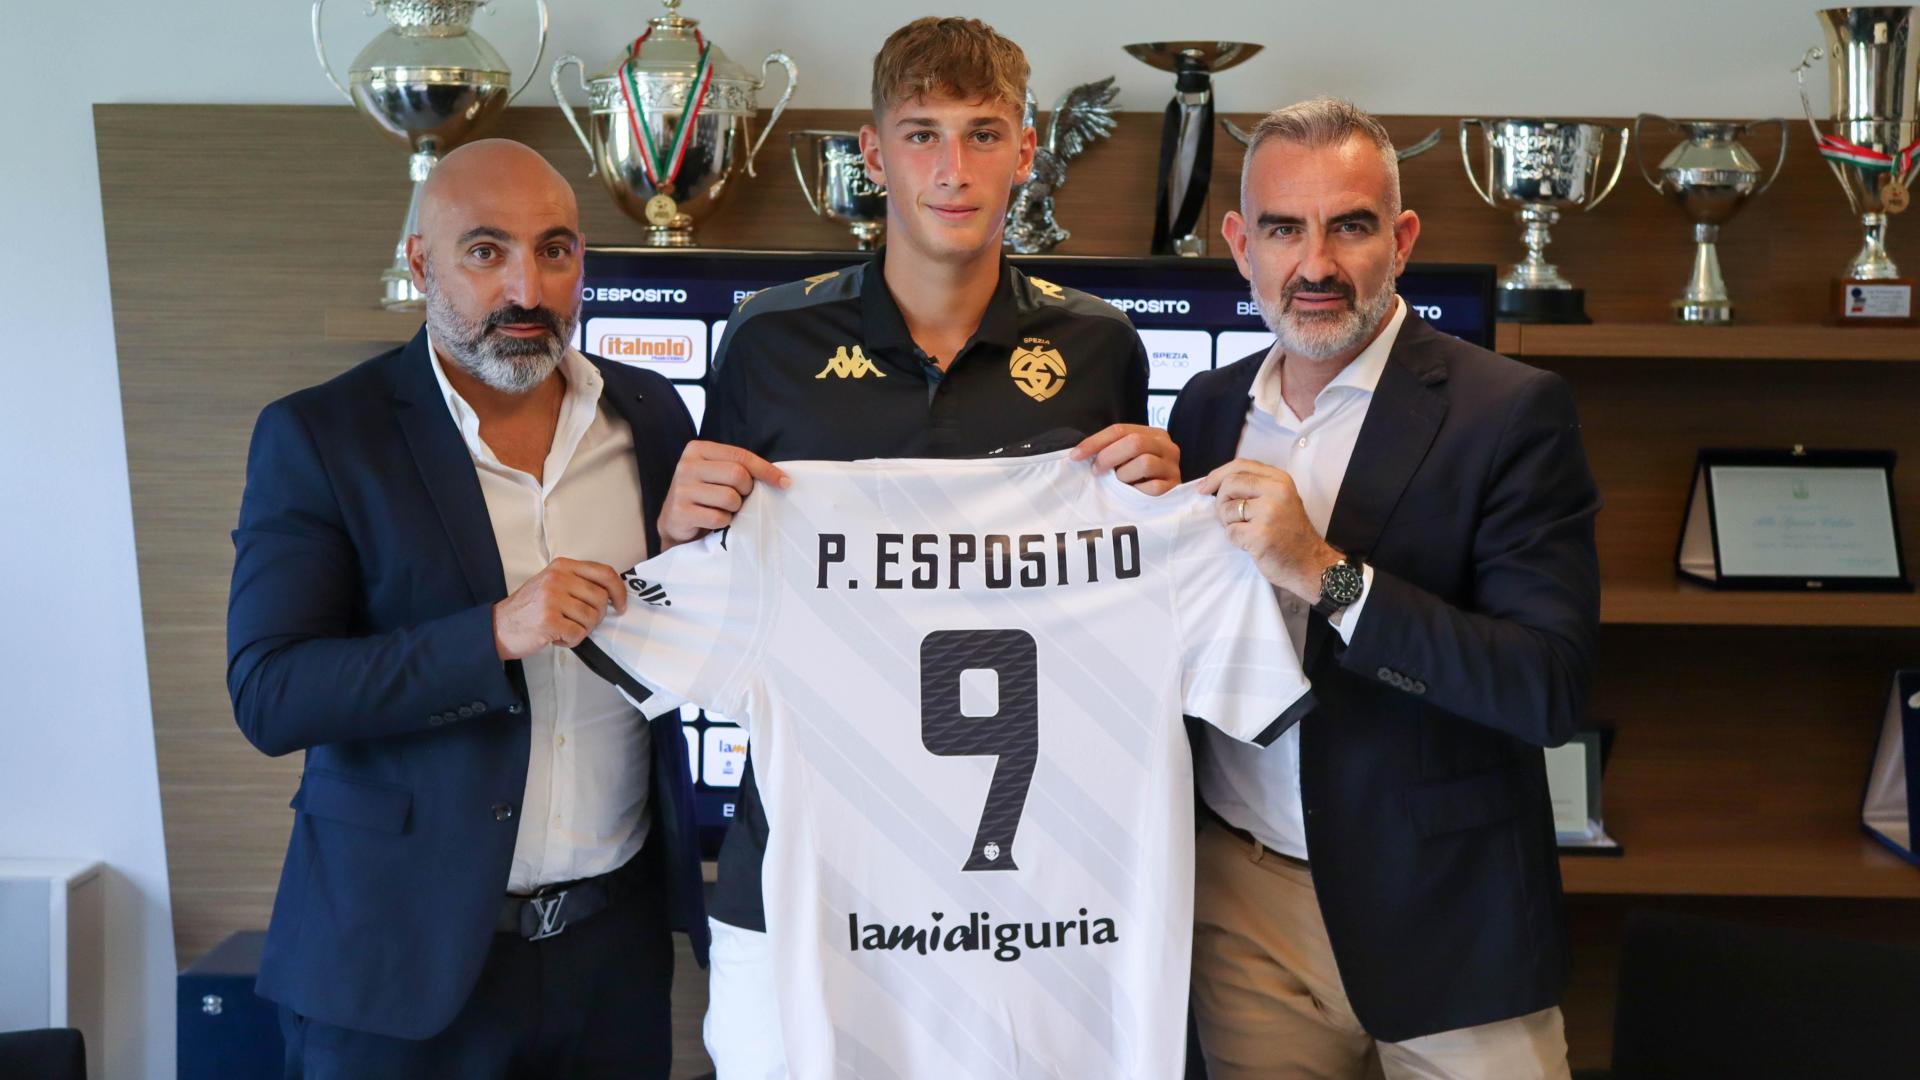 Pio Esposito: "Choosing Spezia was easy, I felt great confidence"